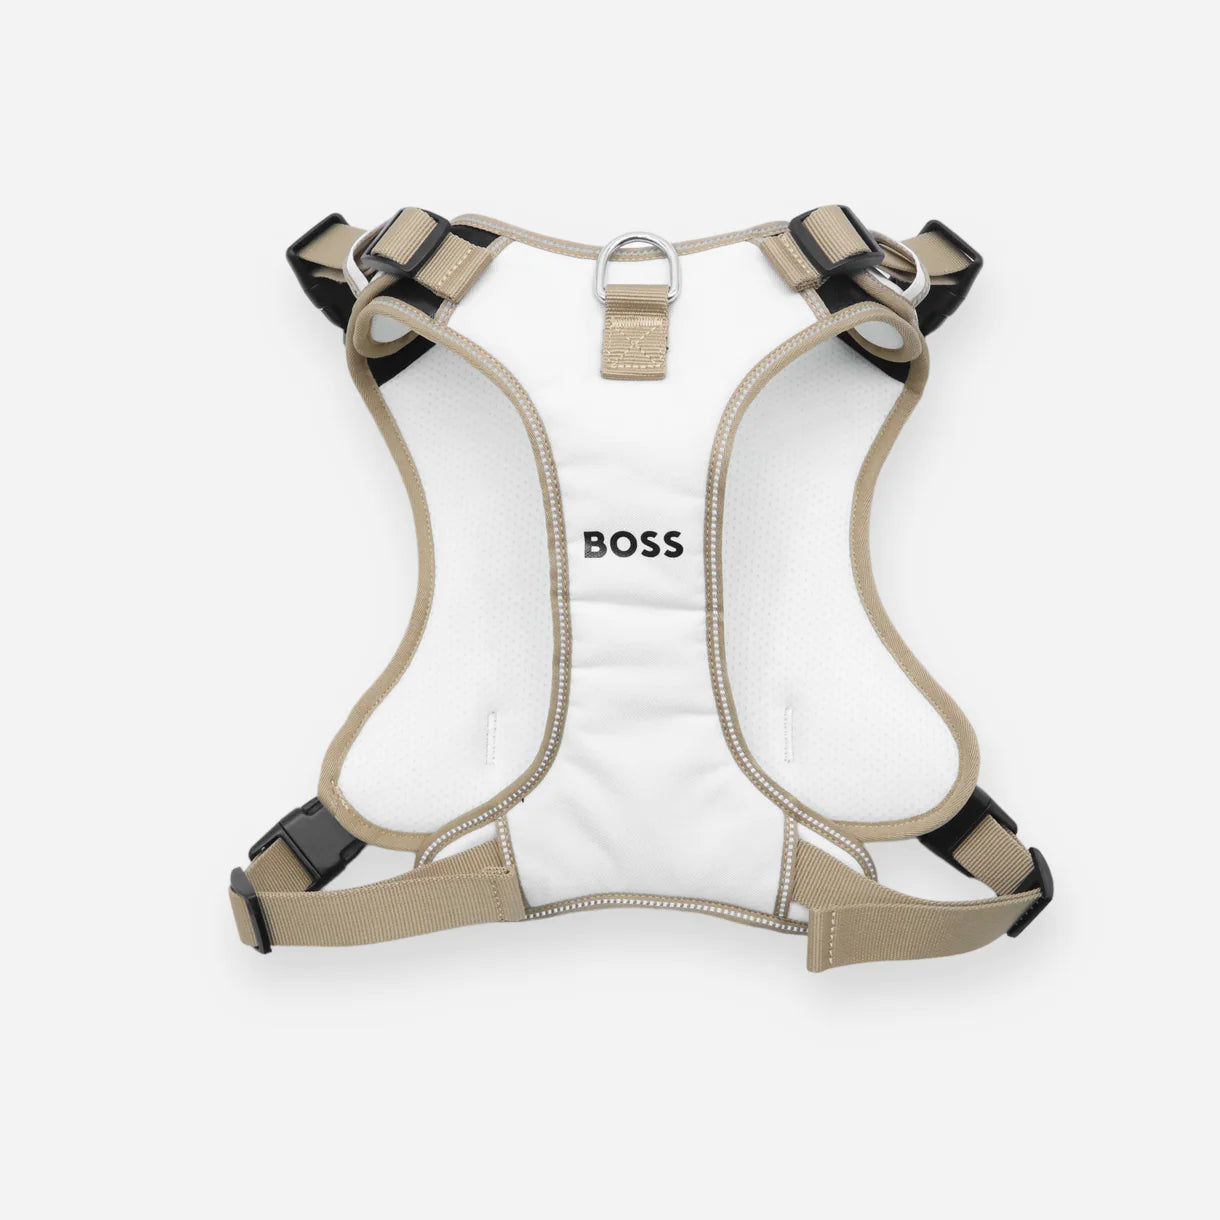 The BOSS Harness